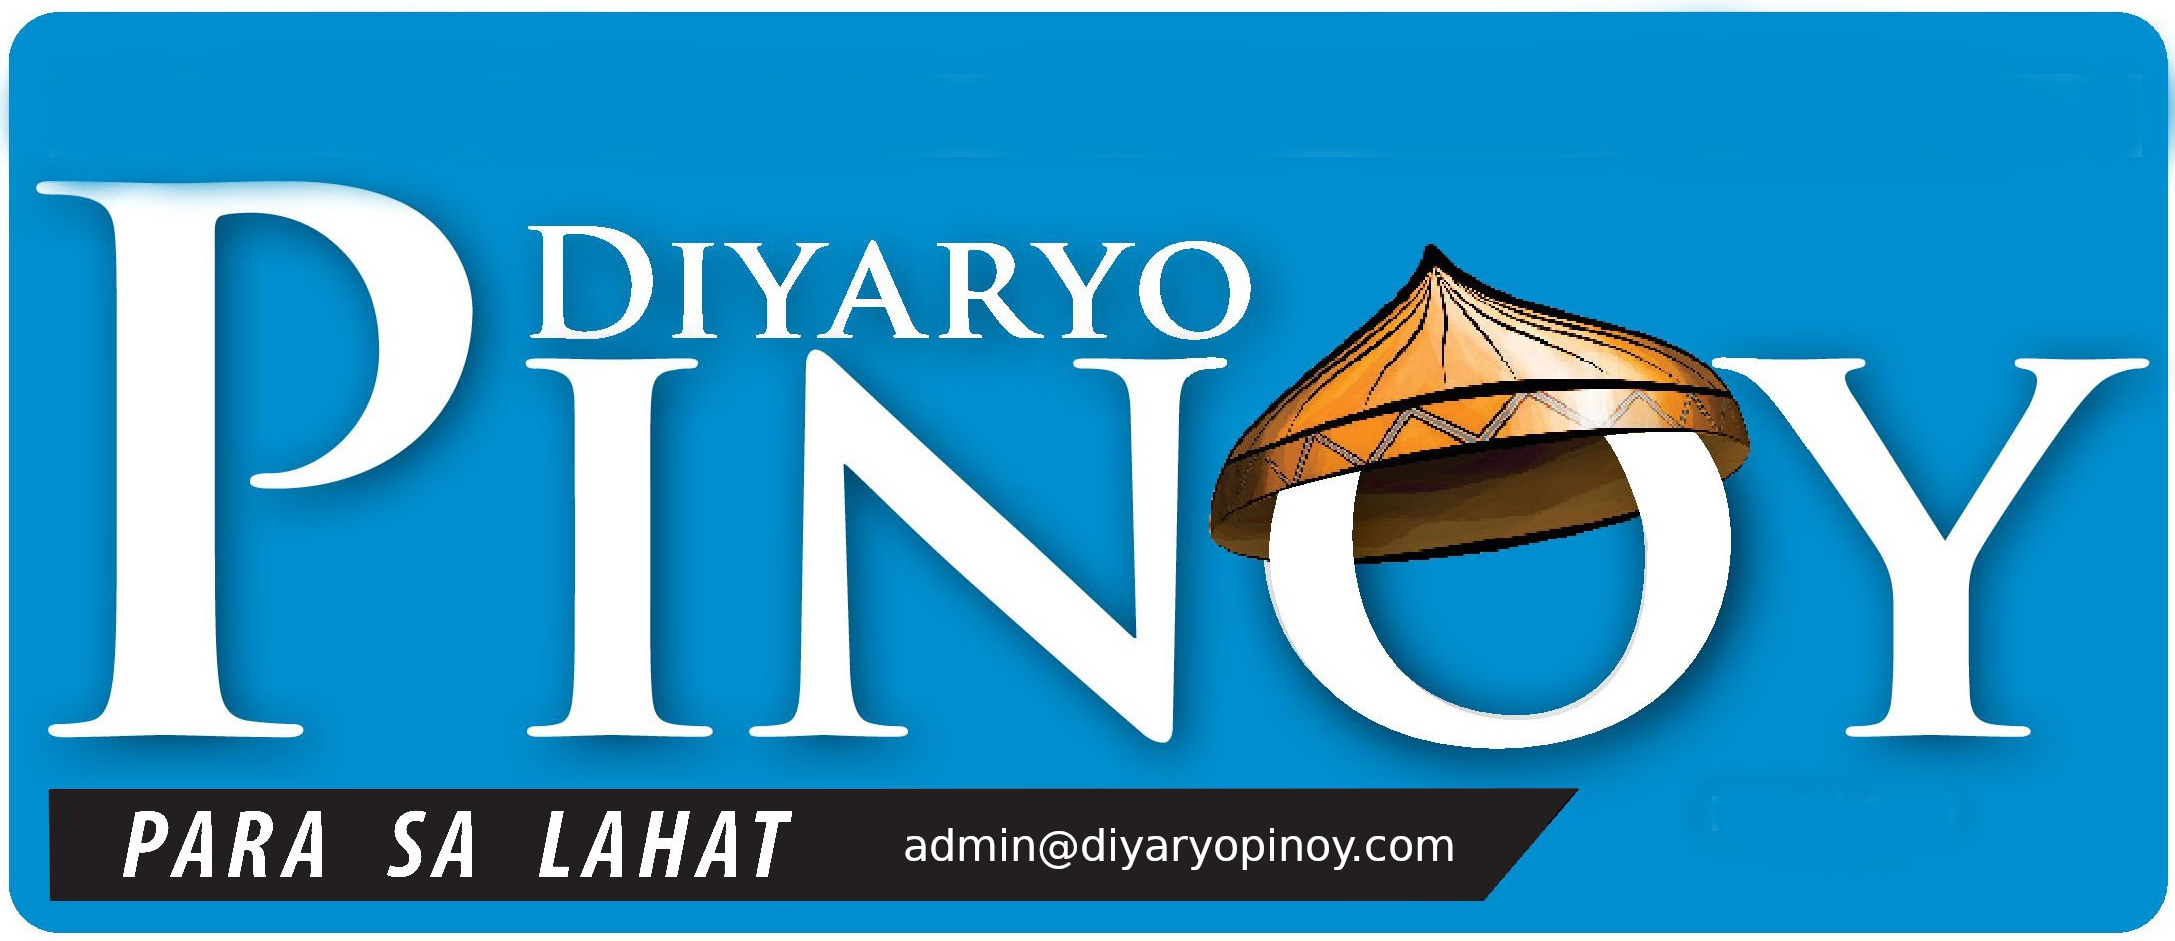 Diyaryo Pinoy Website is Now Online